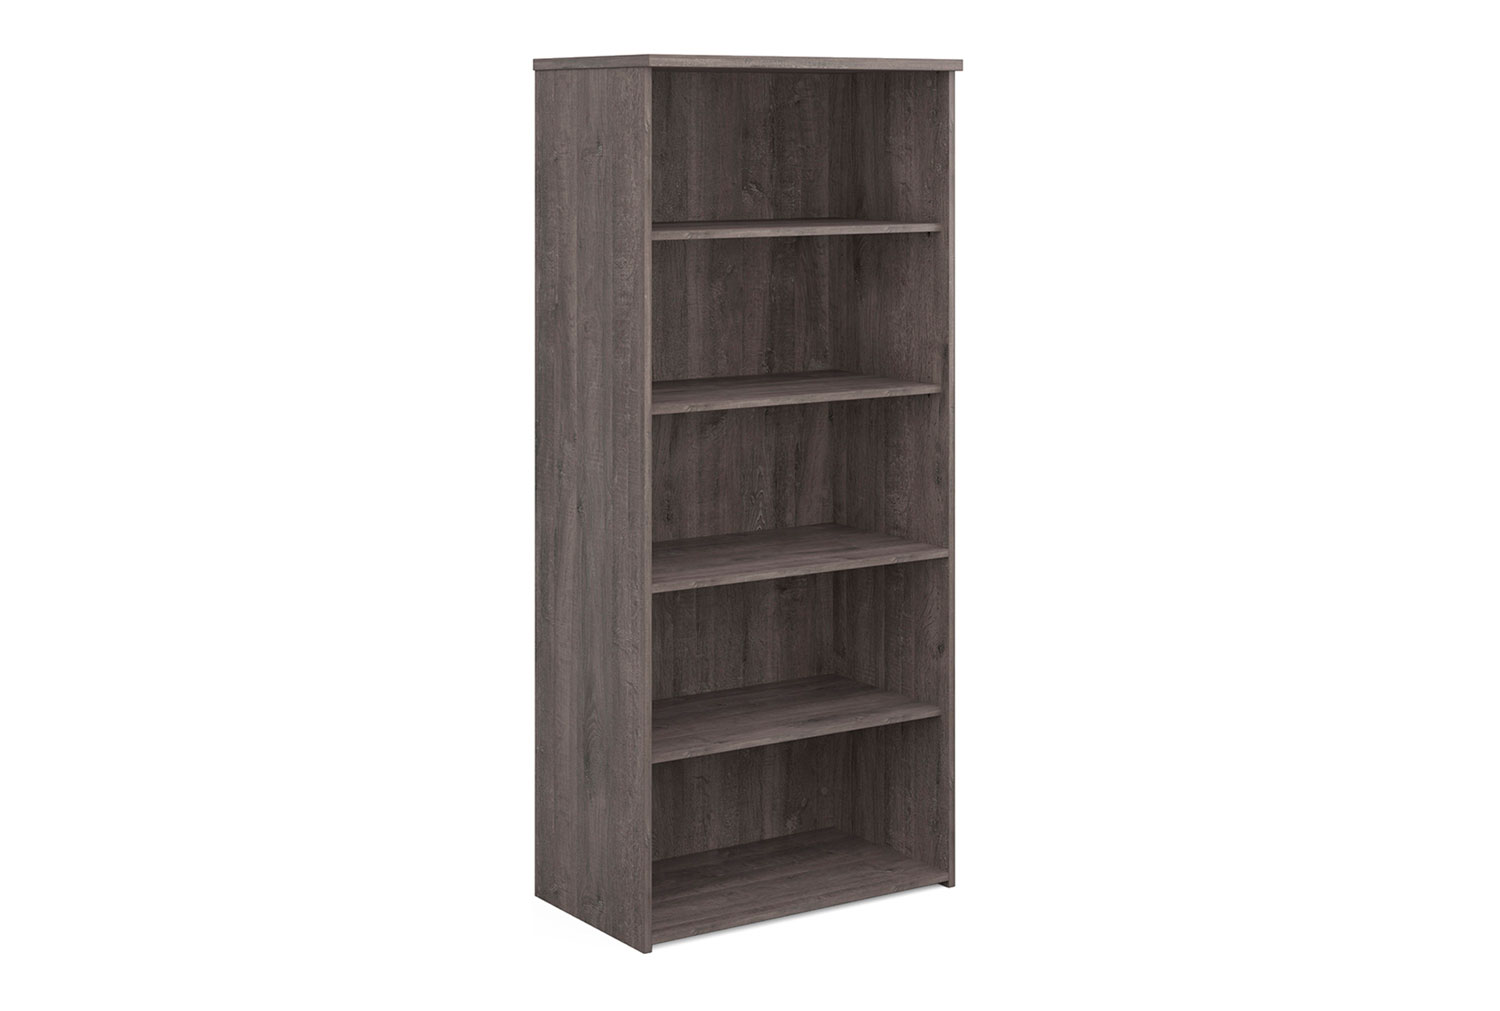 Tully Office Bookcases, 4 Shelf - 80wx47dx179h (cm), Grey Oak